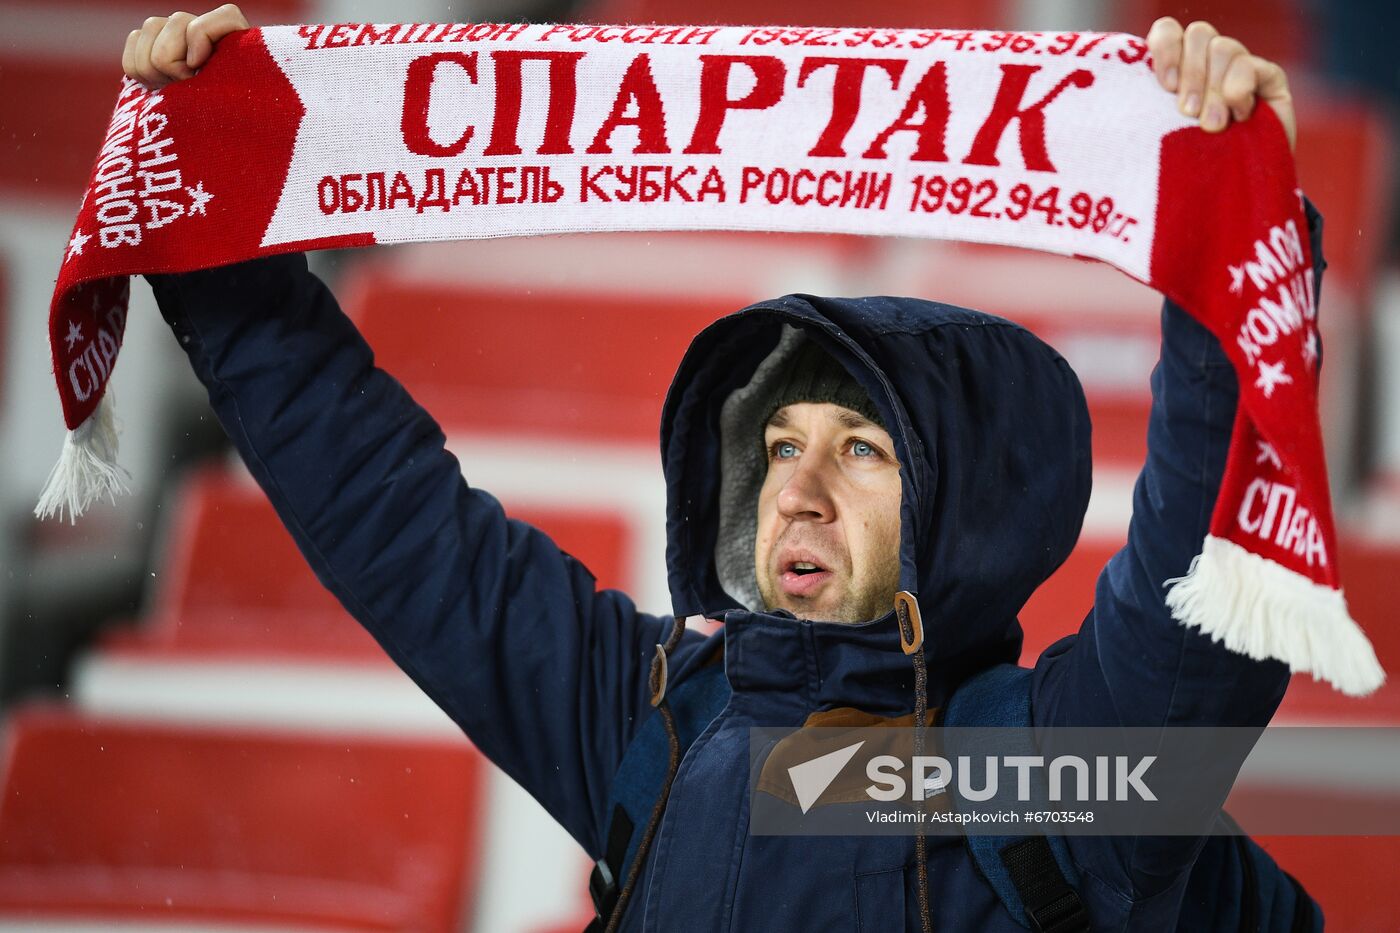 Russia Soccer Europa League Spartak - Napoli